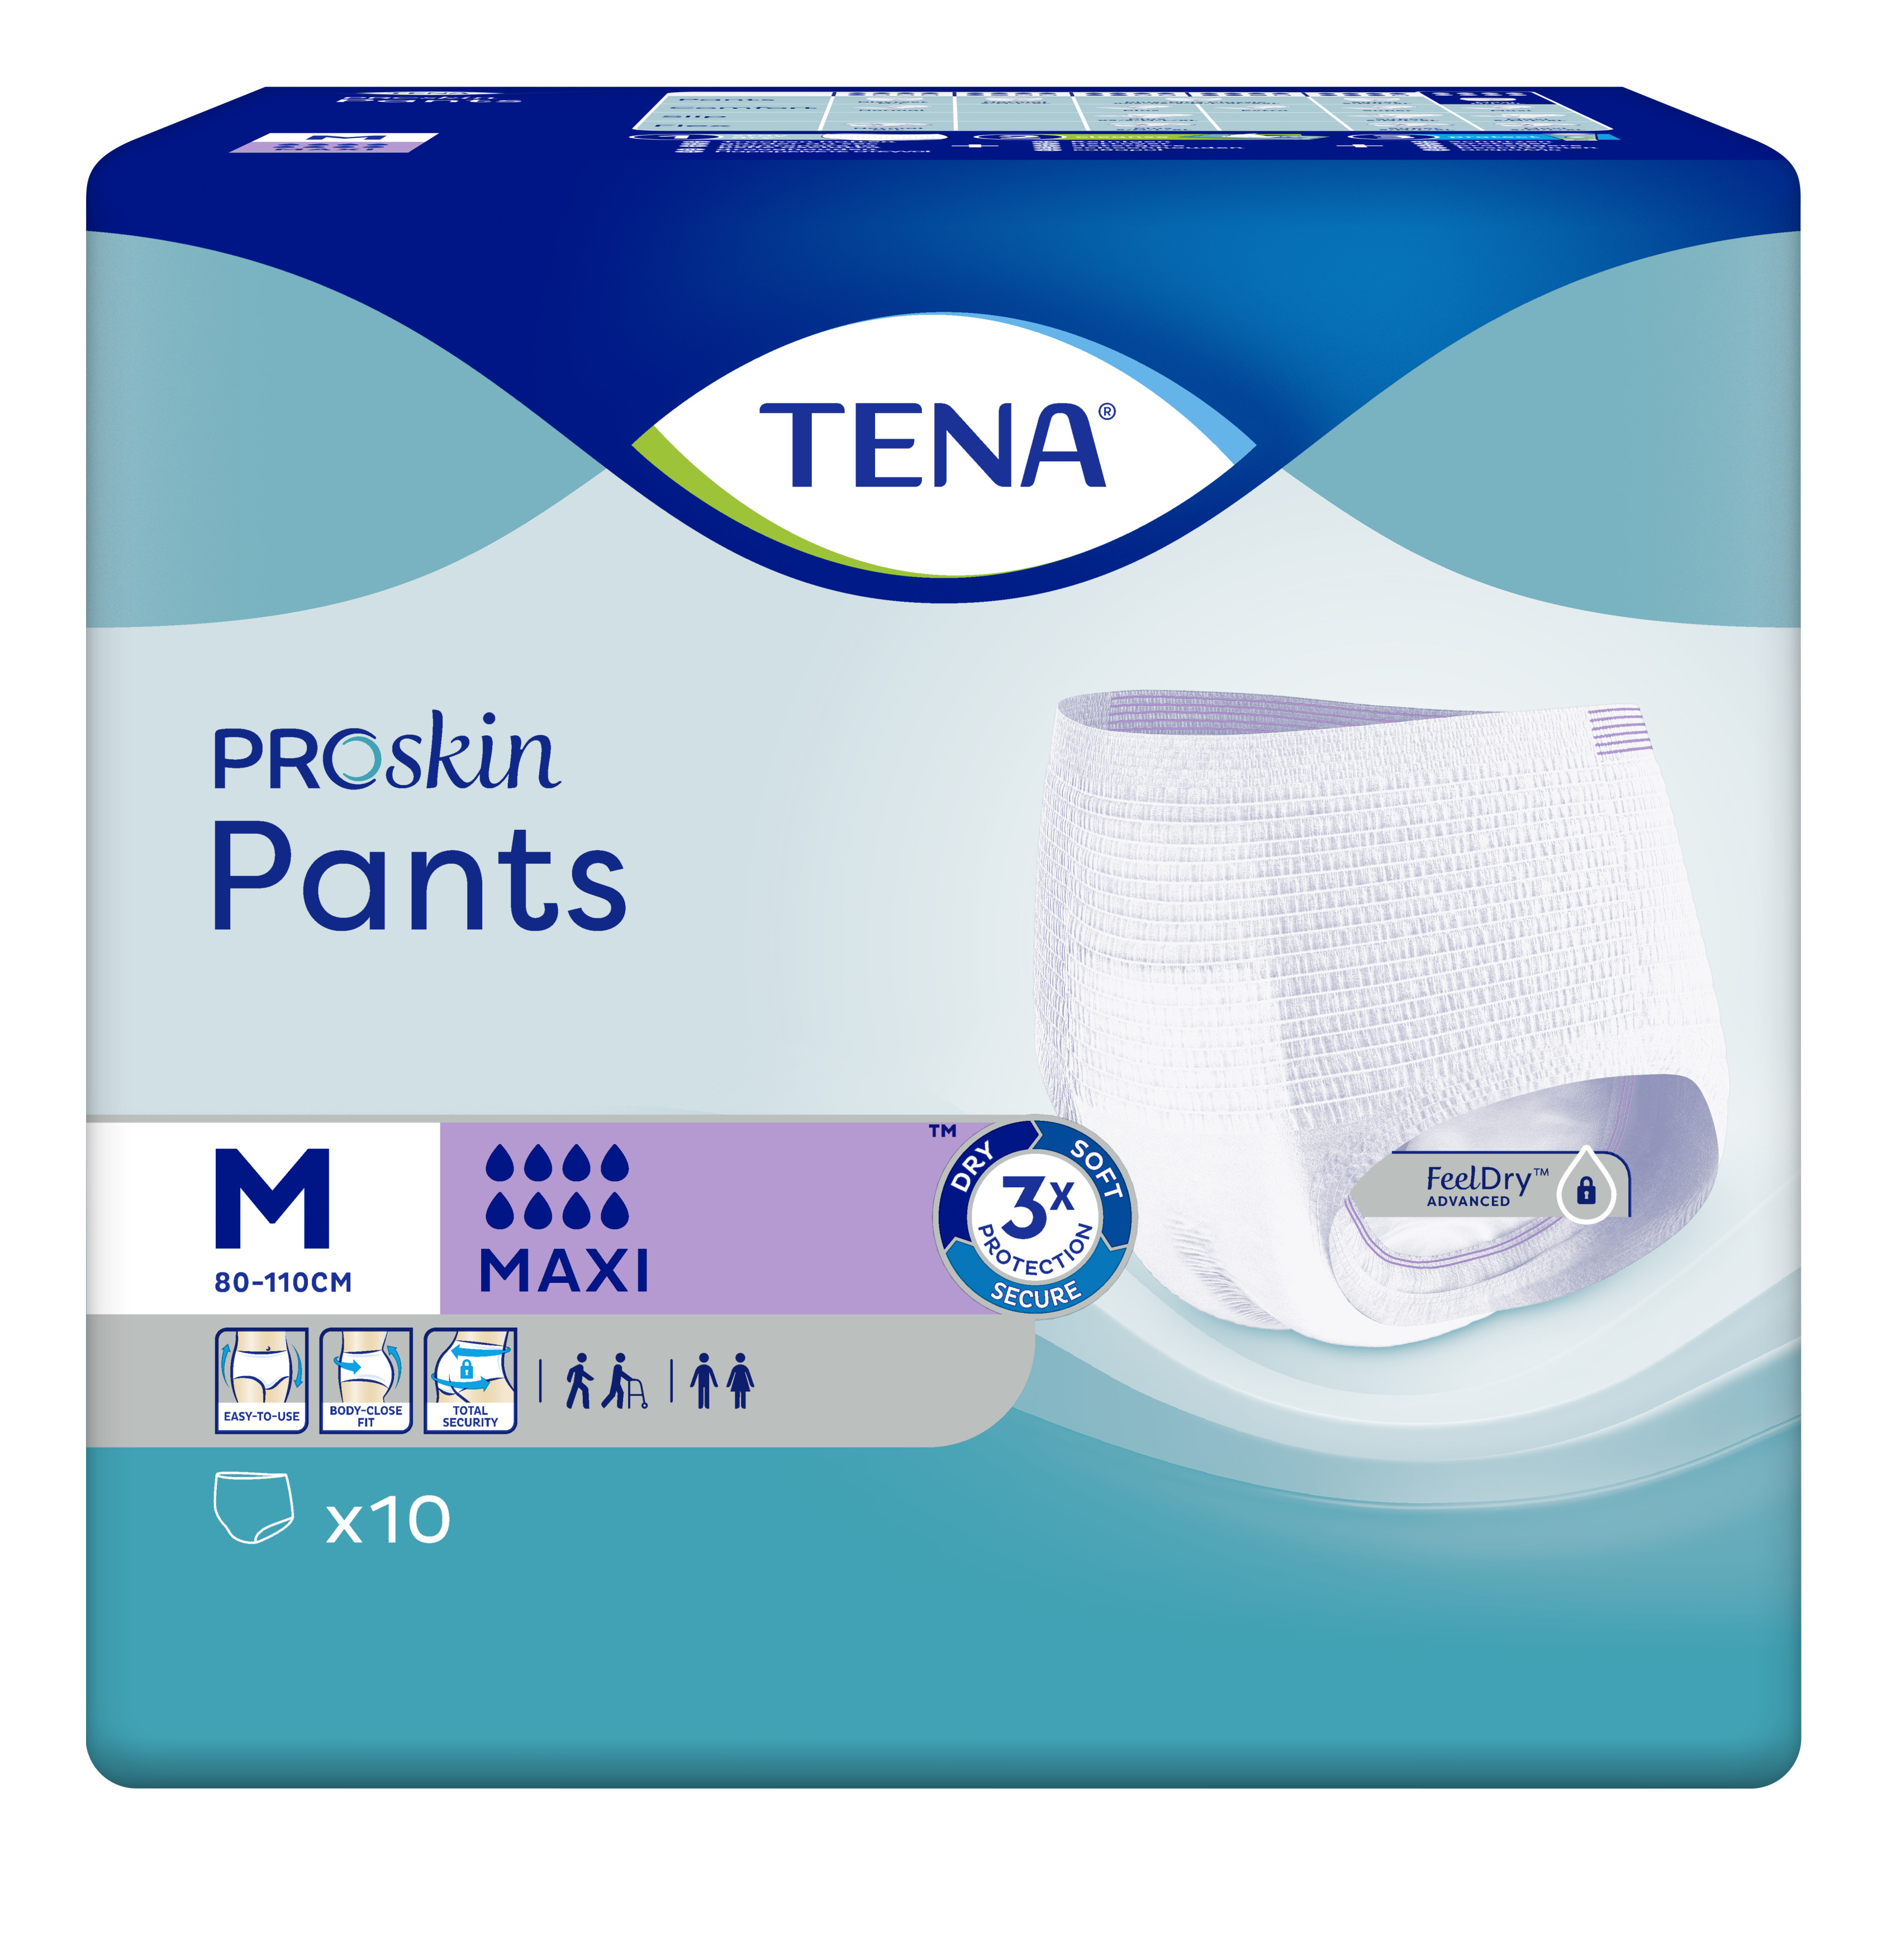 TENA PROskin Pants Maxi Medium image 0